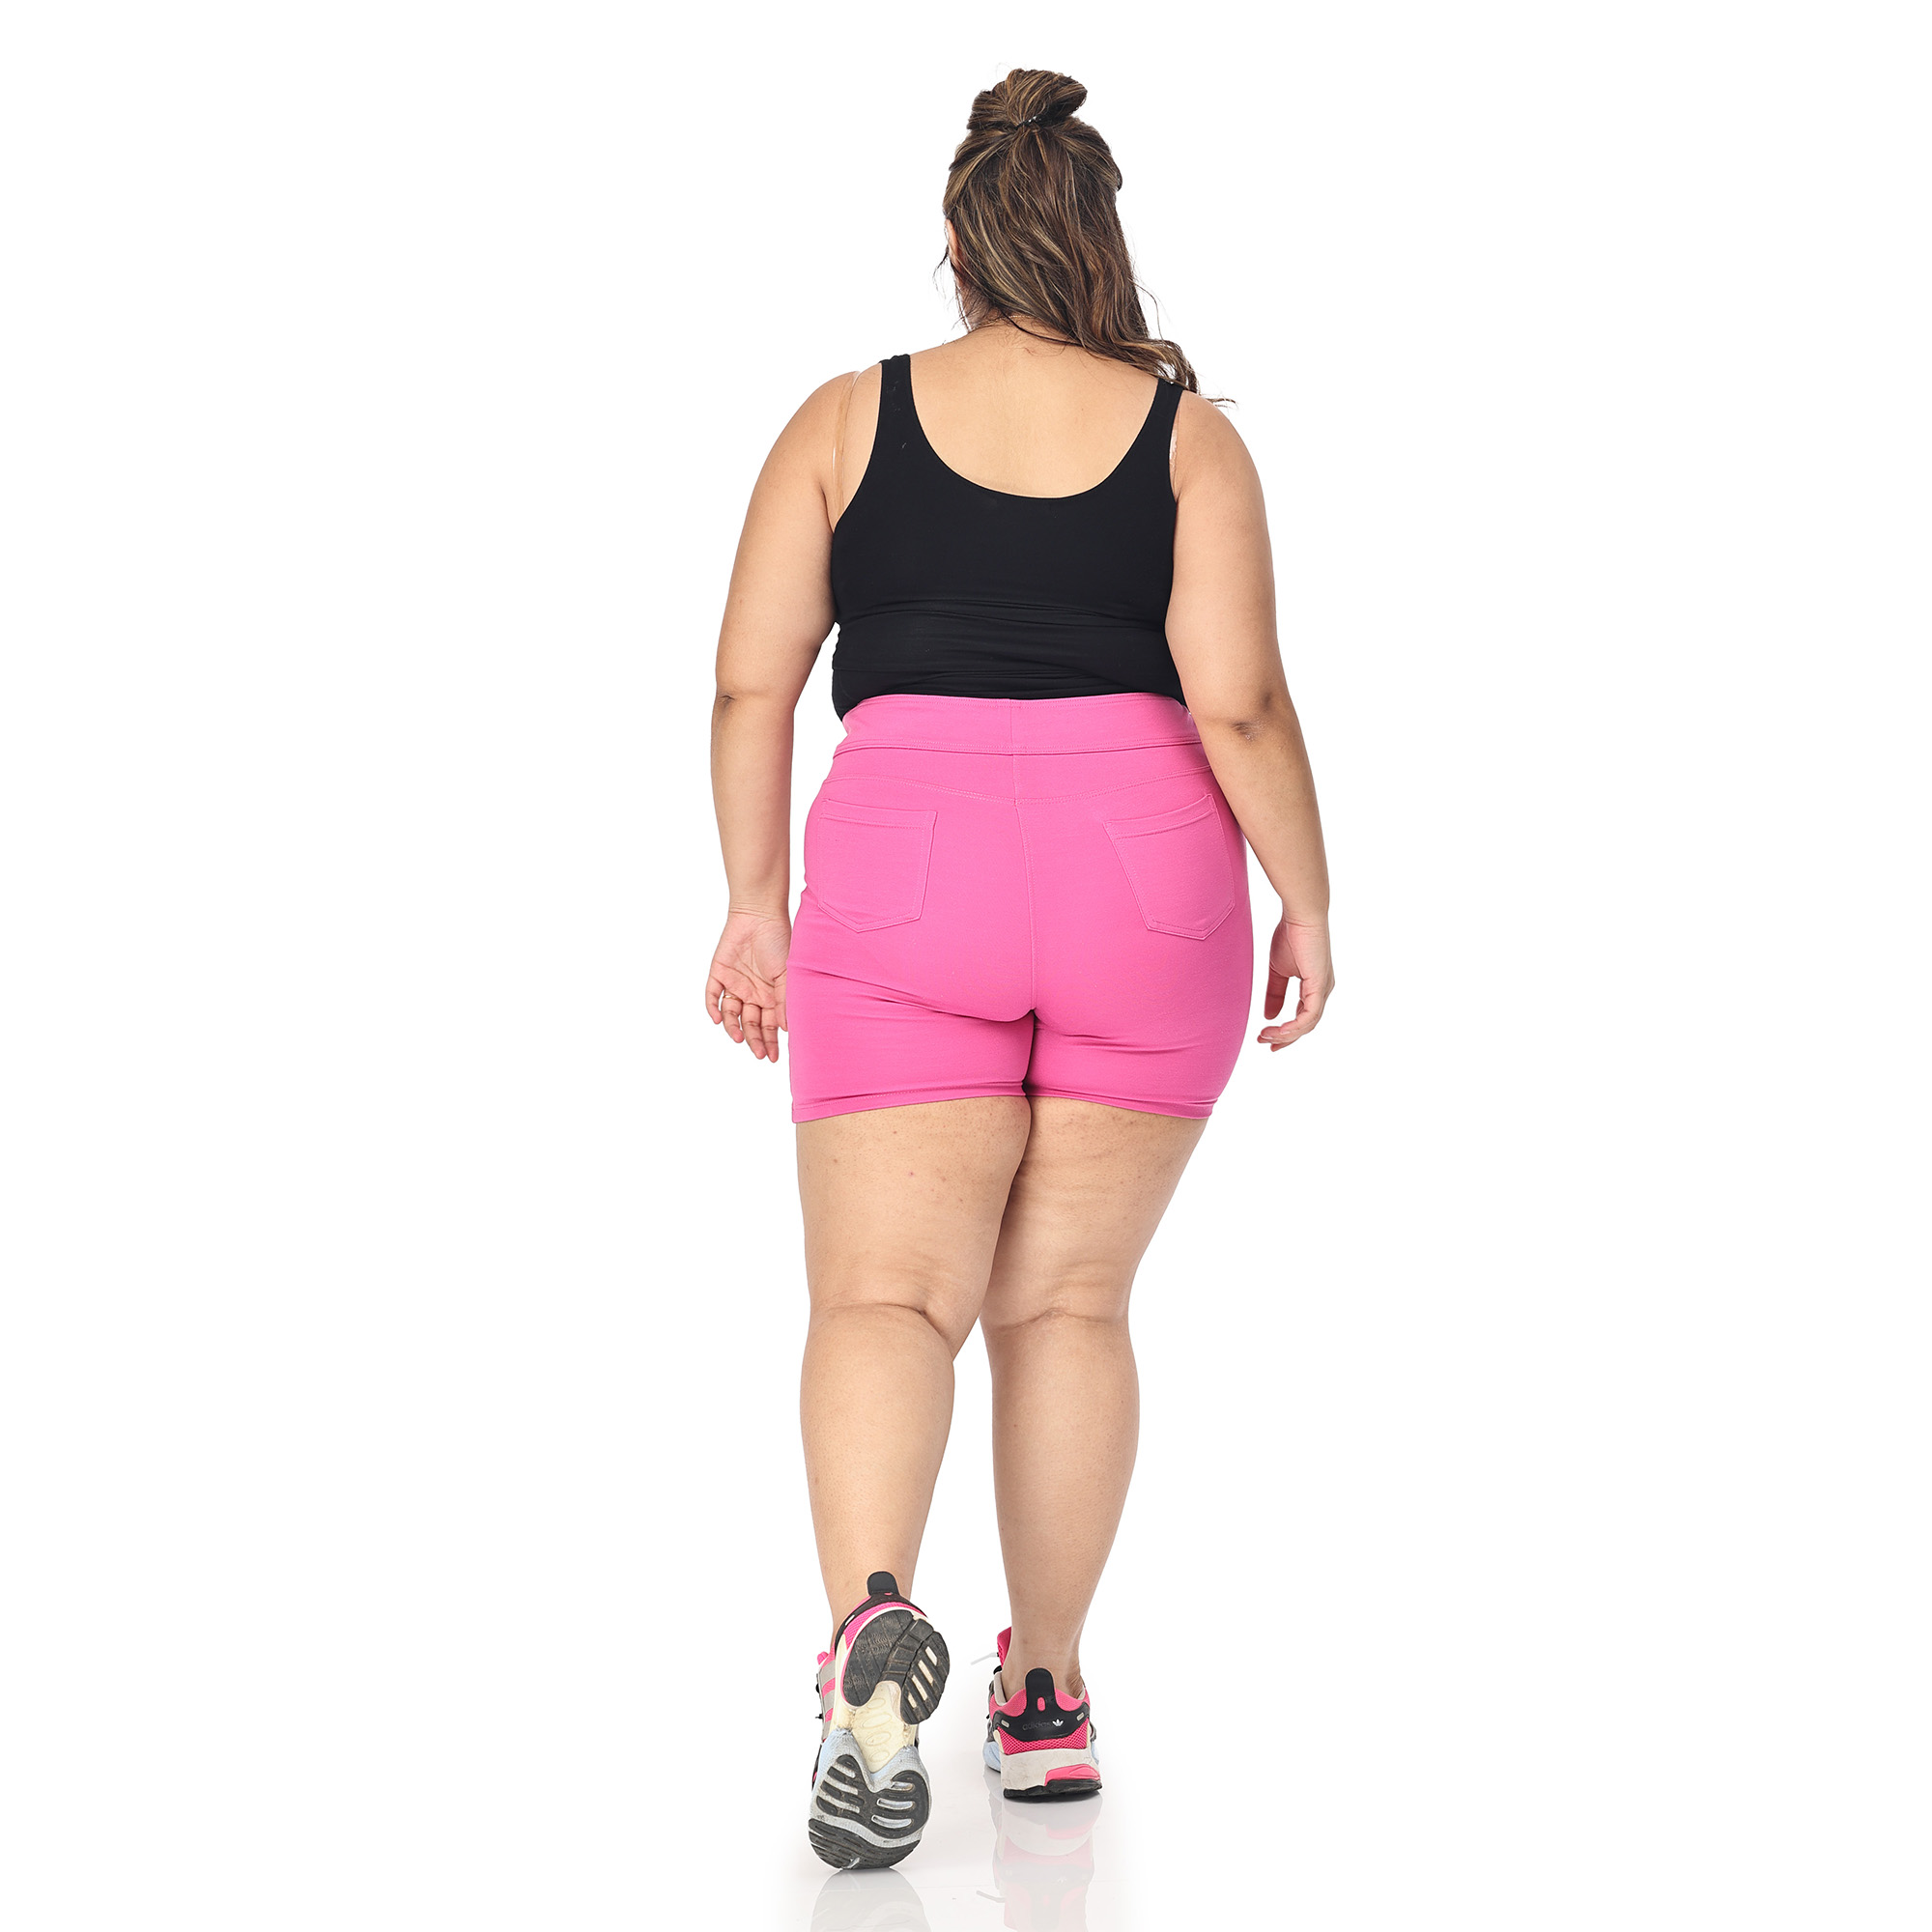 Pink shorts women - Plus size active shape wear - 2 back pockets - Belore  Slims